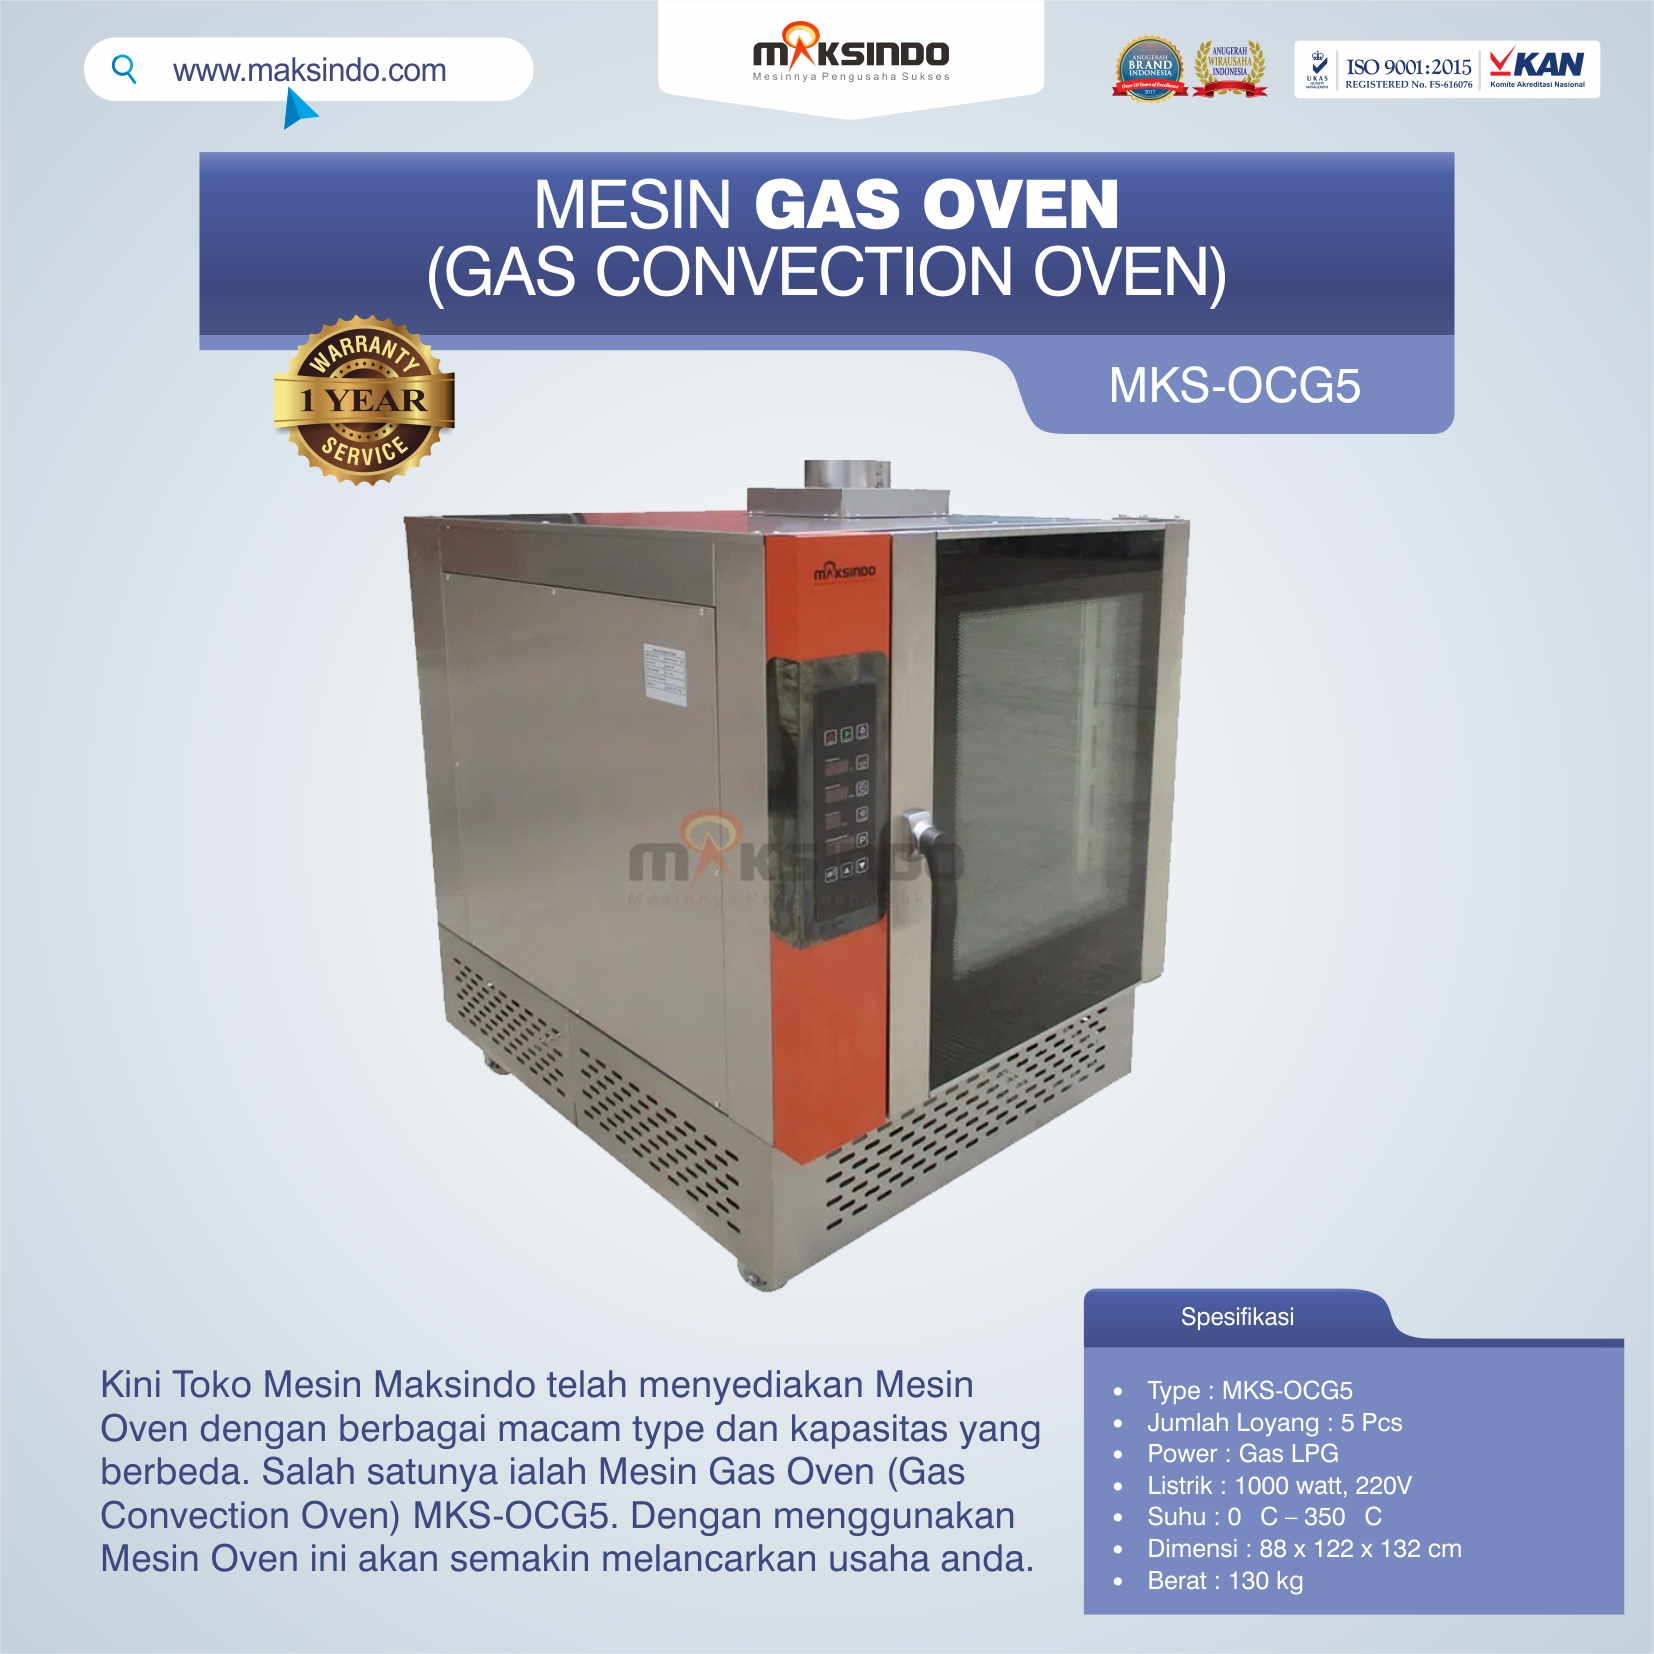 Jual Mesin Gas Oven (Gas Convection Oven) MKS-OCG5 di Solo